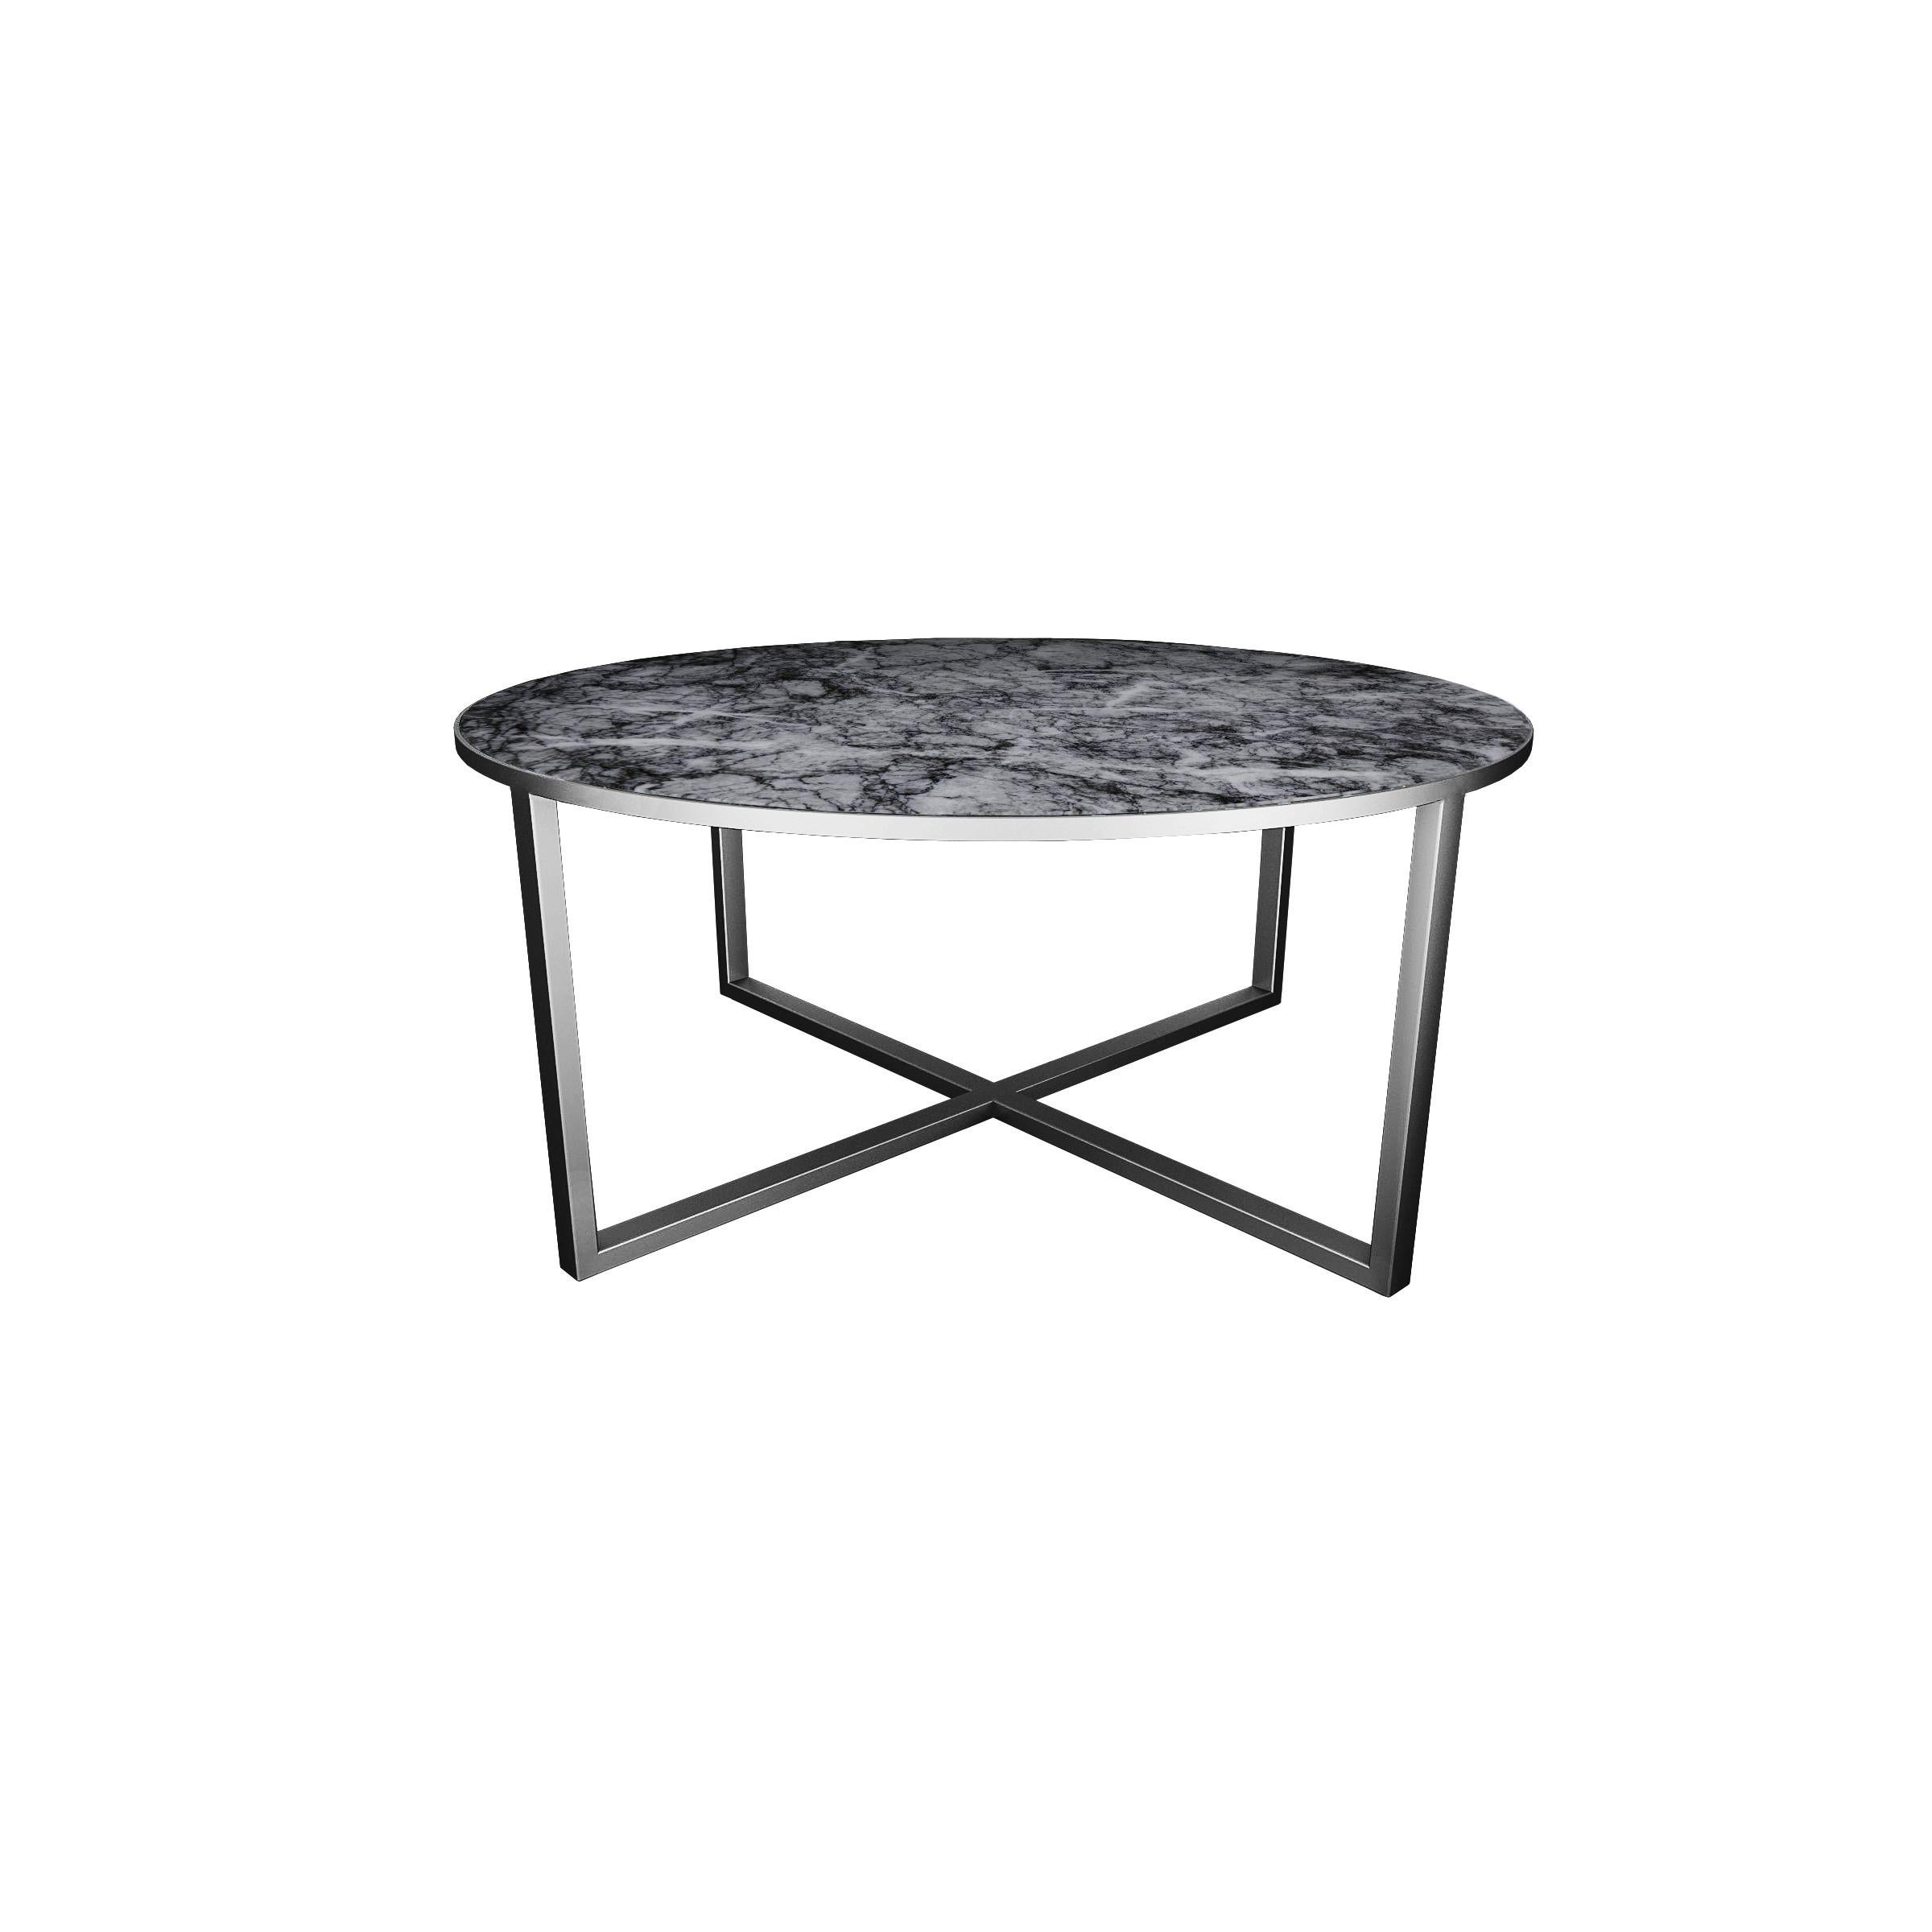 Scandinavian Modern NORDST MIA Coffee Table, Italian White Mountain Marble, Danish Modern Design For Sale